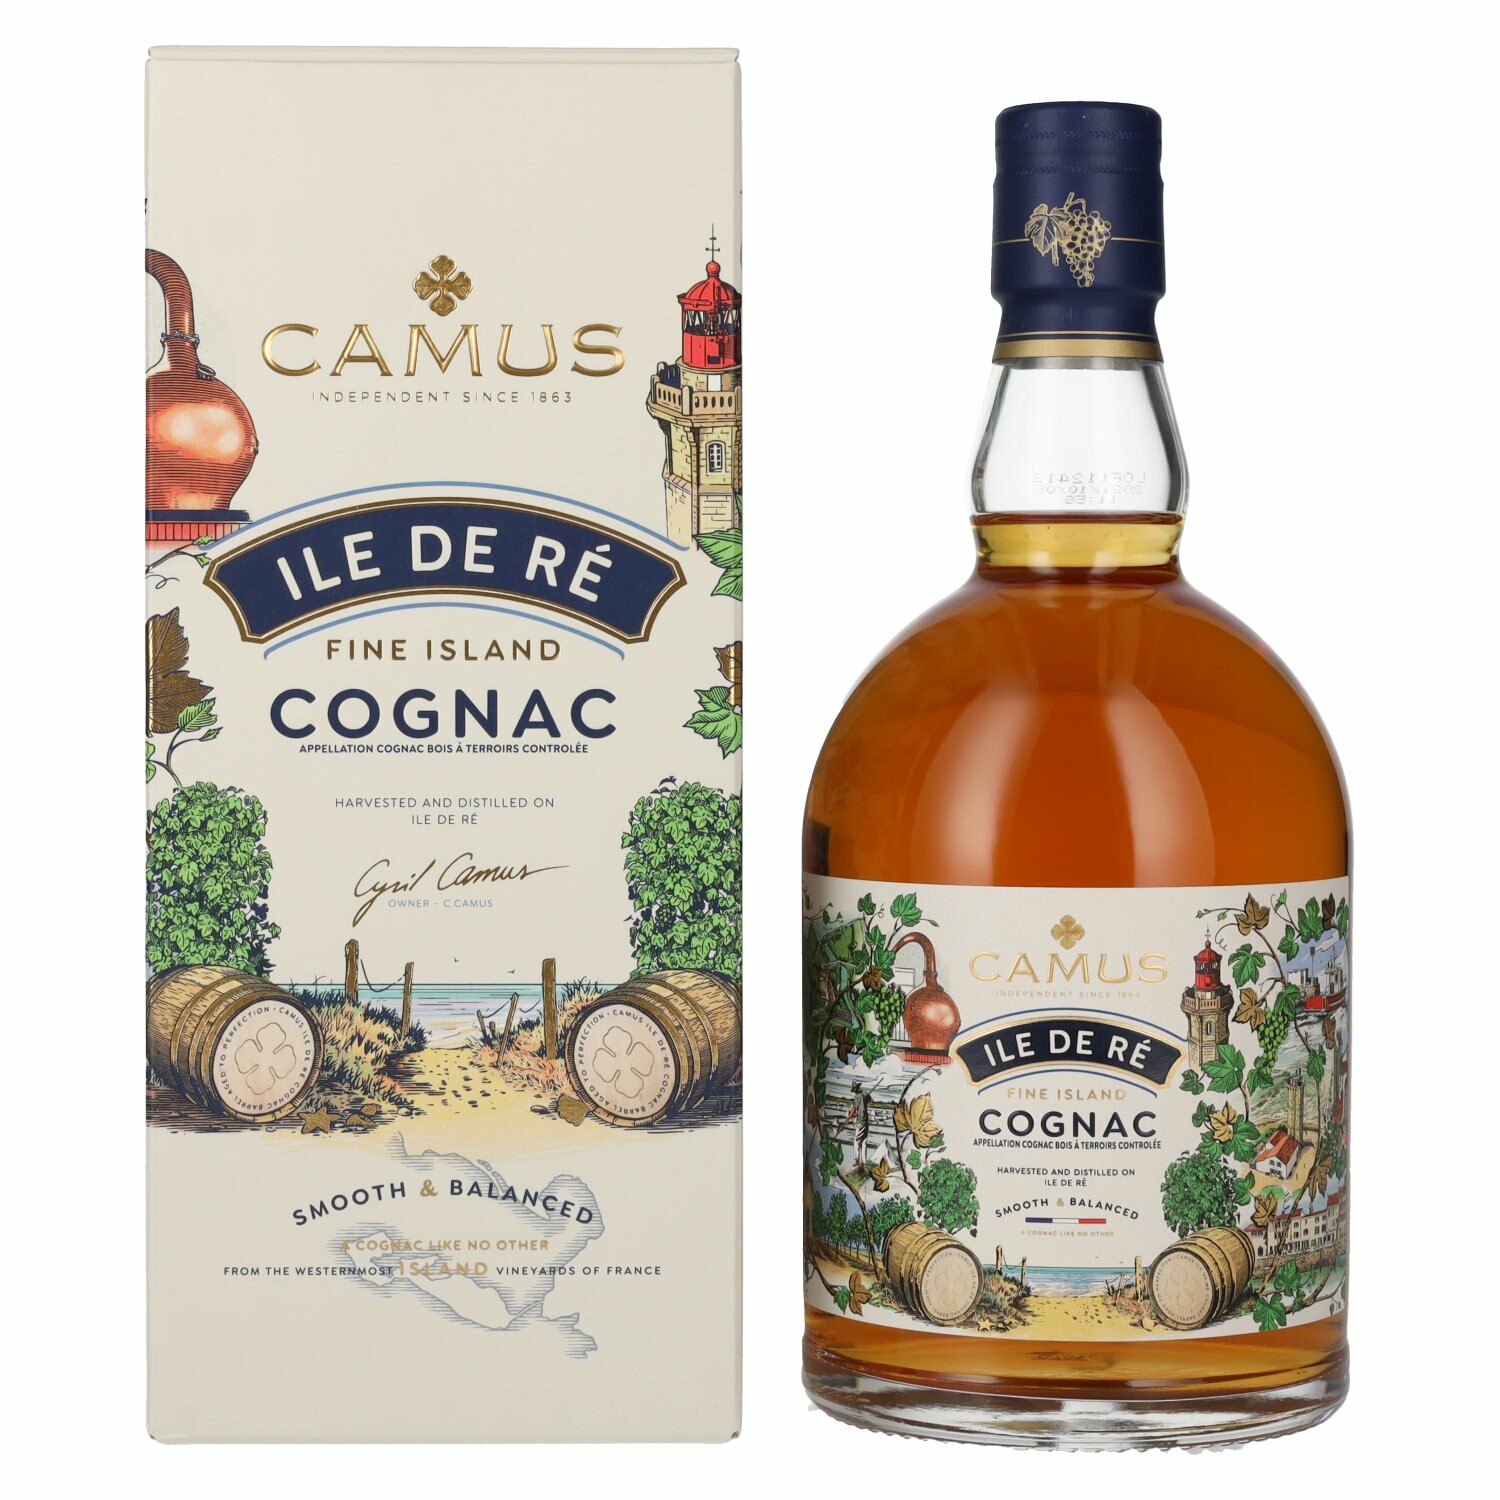 Camus Ile de Ré Fine Island Cognac 40% Vol. 0,7l in Giftbox